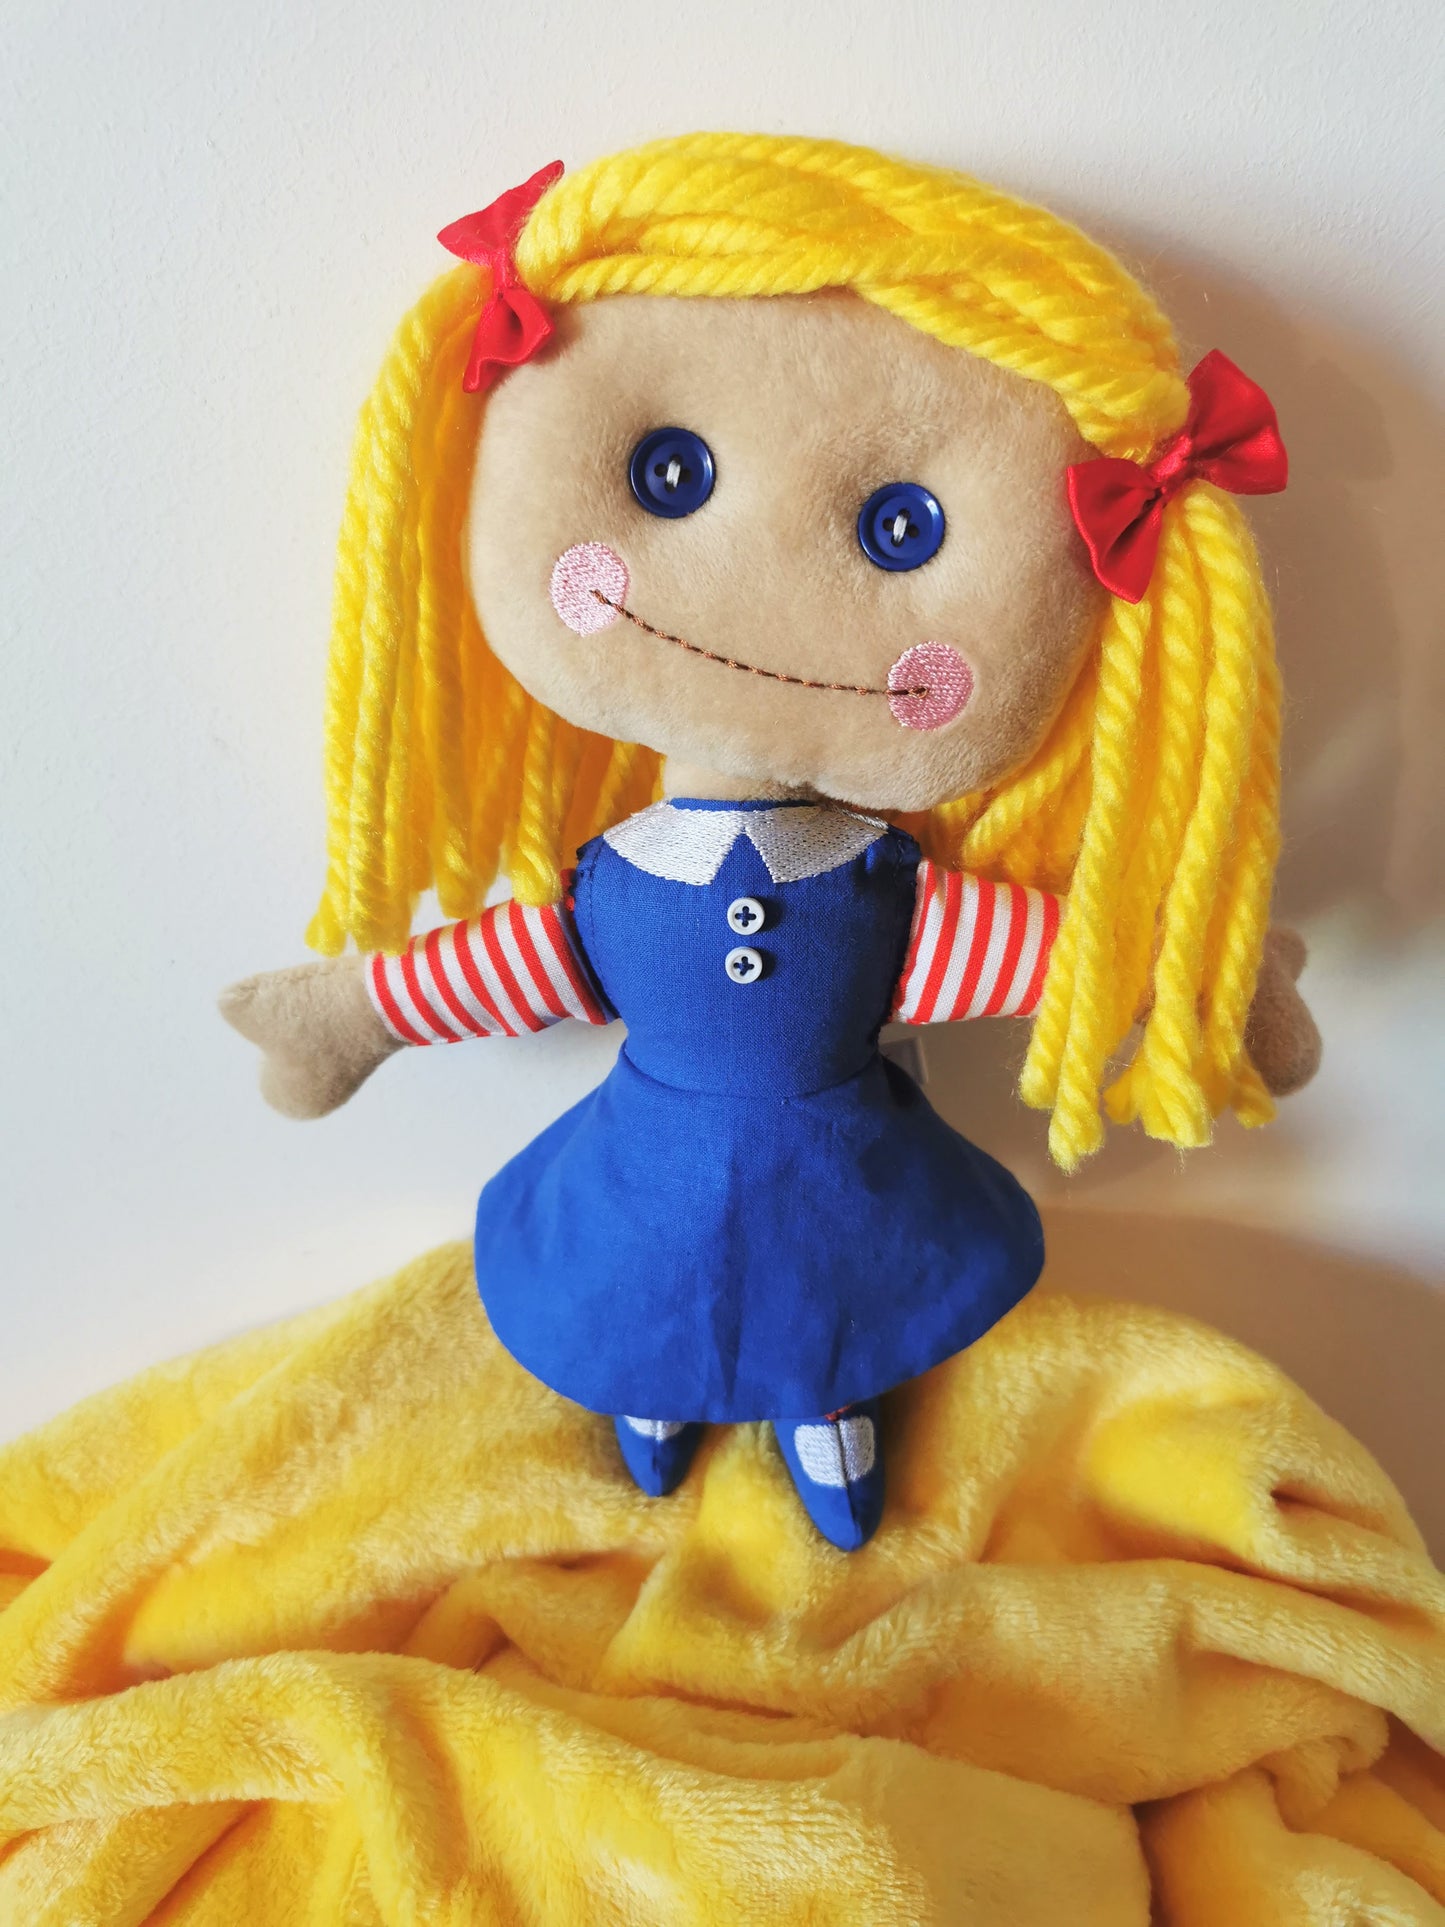 Pluș personalizat Blonde Janie Doll bazat pe Toy Story, Toy Story 2 replică a lui Janie Doll, păpușă camera lui Sid, 23 cm